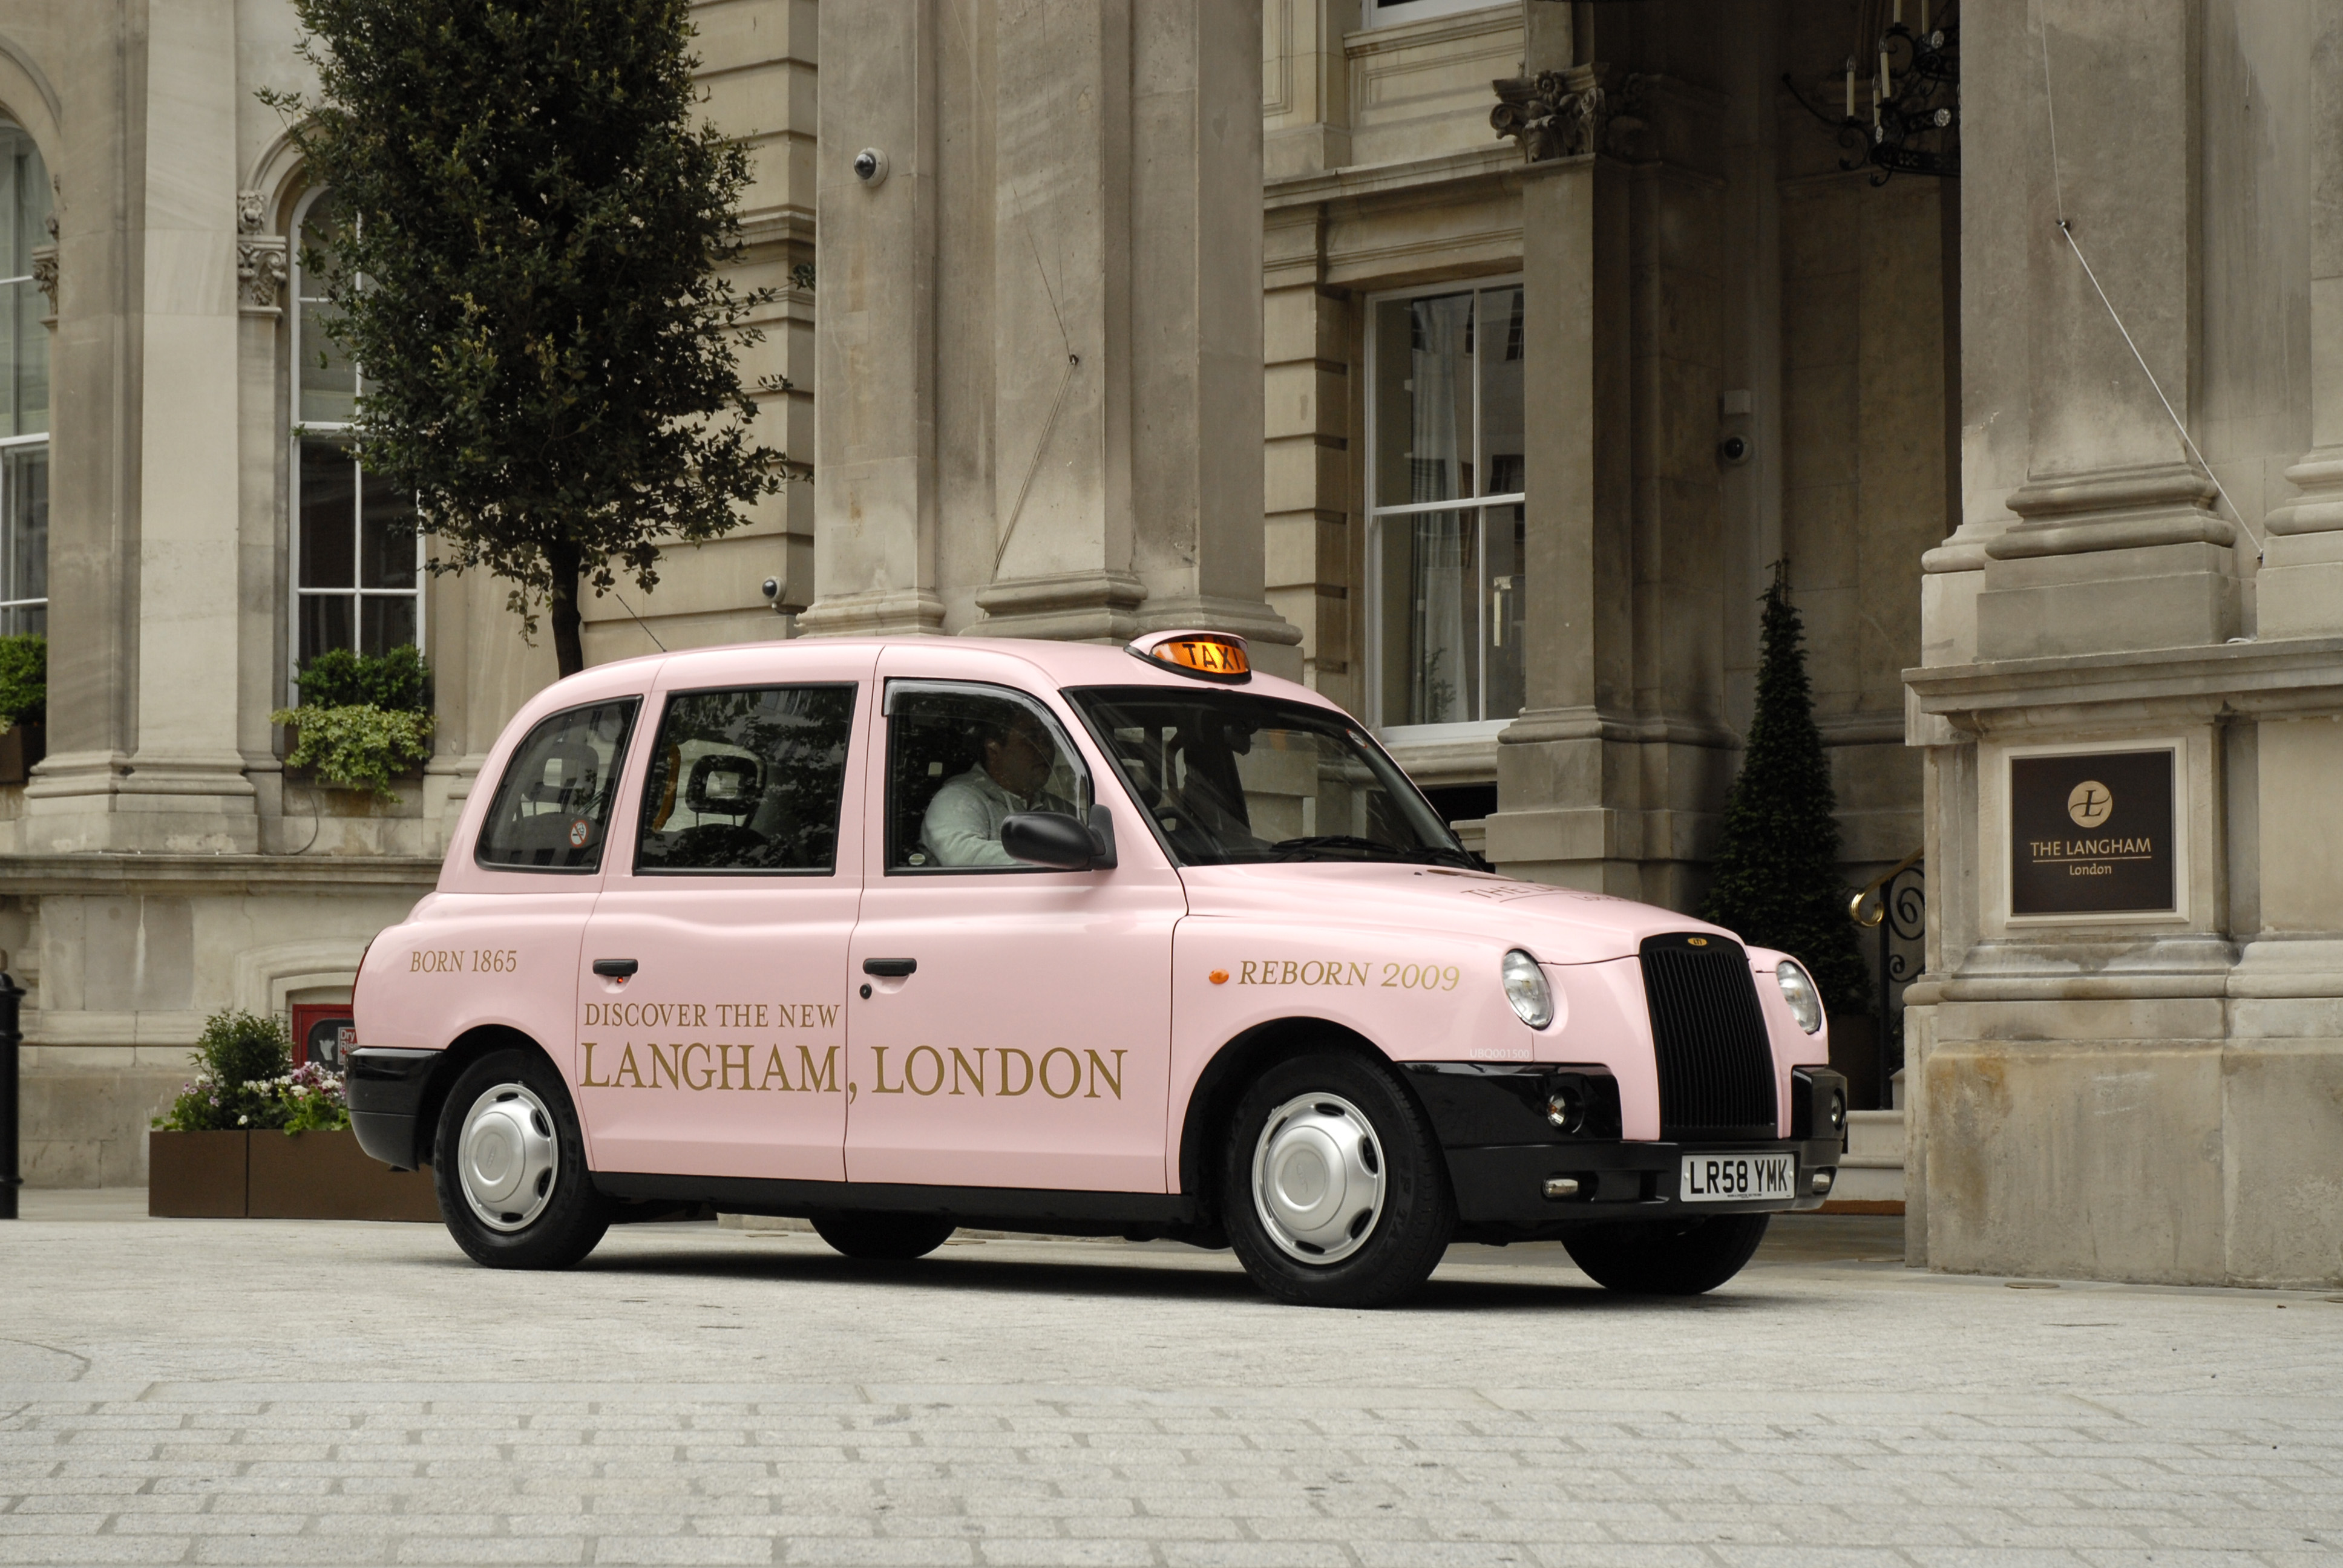 2009 Ubiquitous taxi advertising campaign for The Langham - Langham London